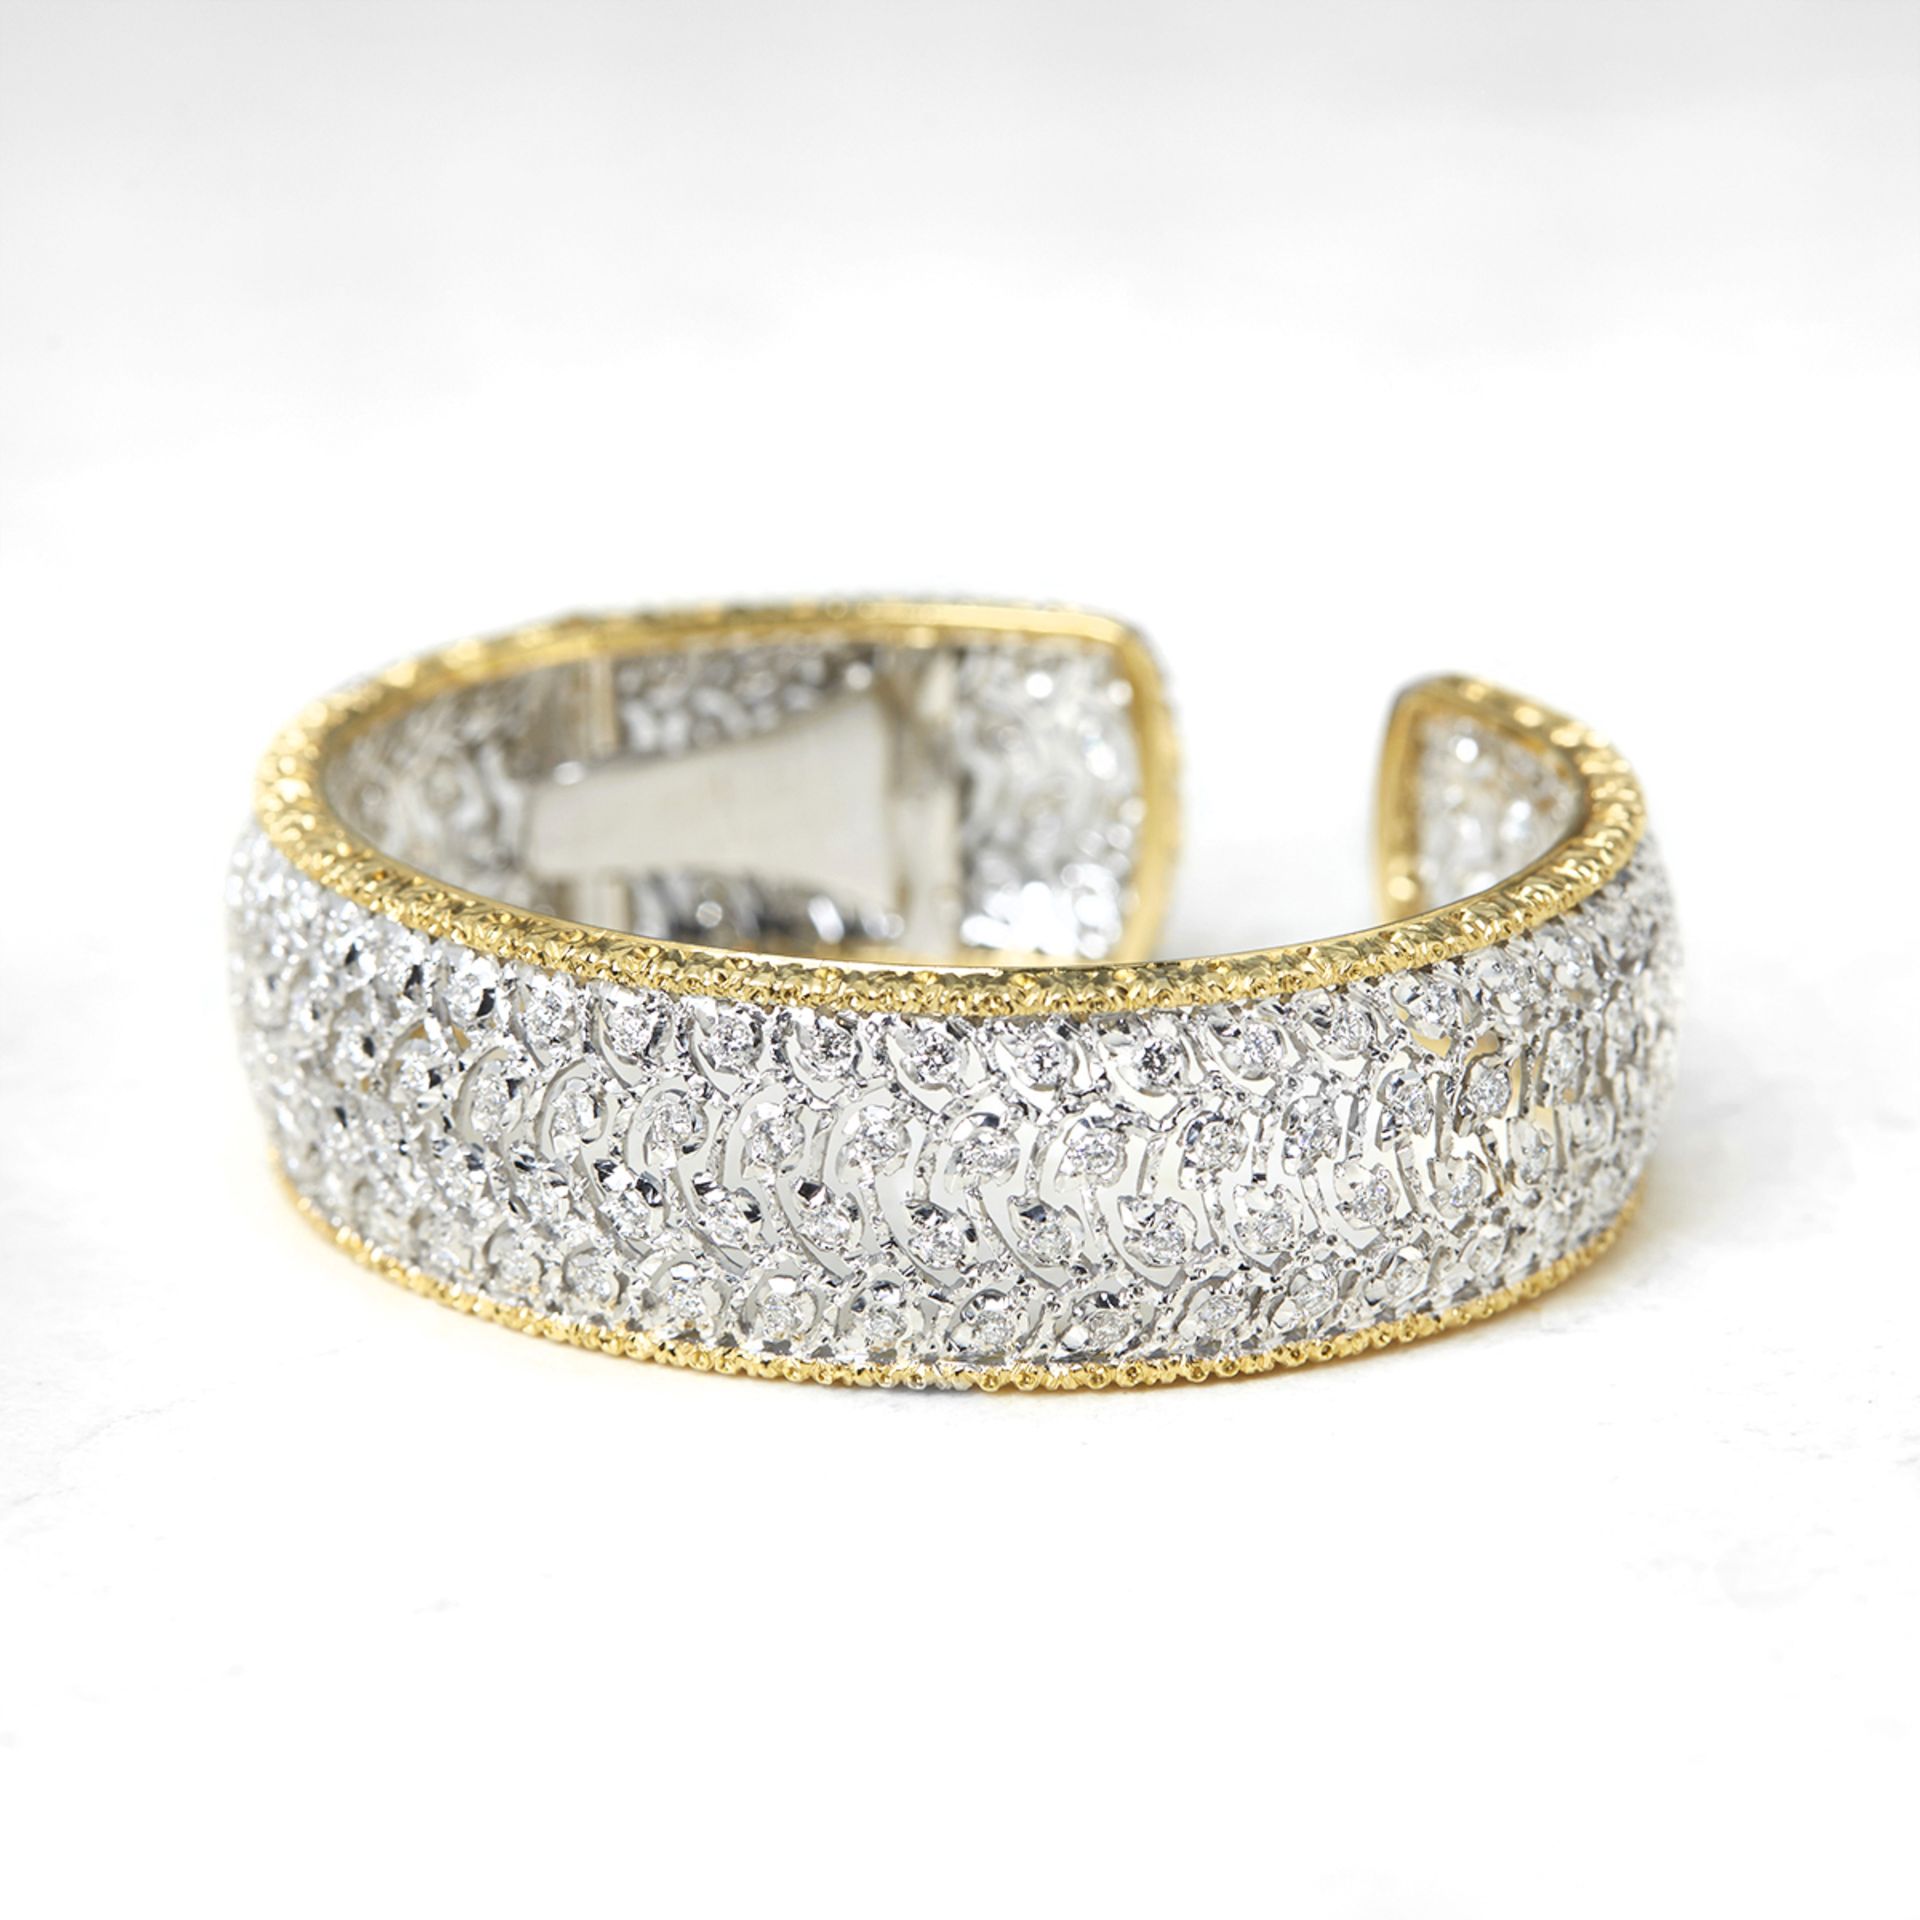 Buccellati 18k White & Yellow Gold 5.00ct Diamond Cuff Bracelet with Presentation Box